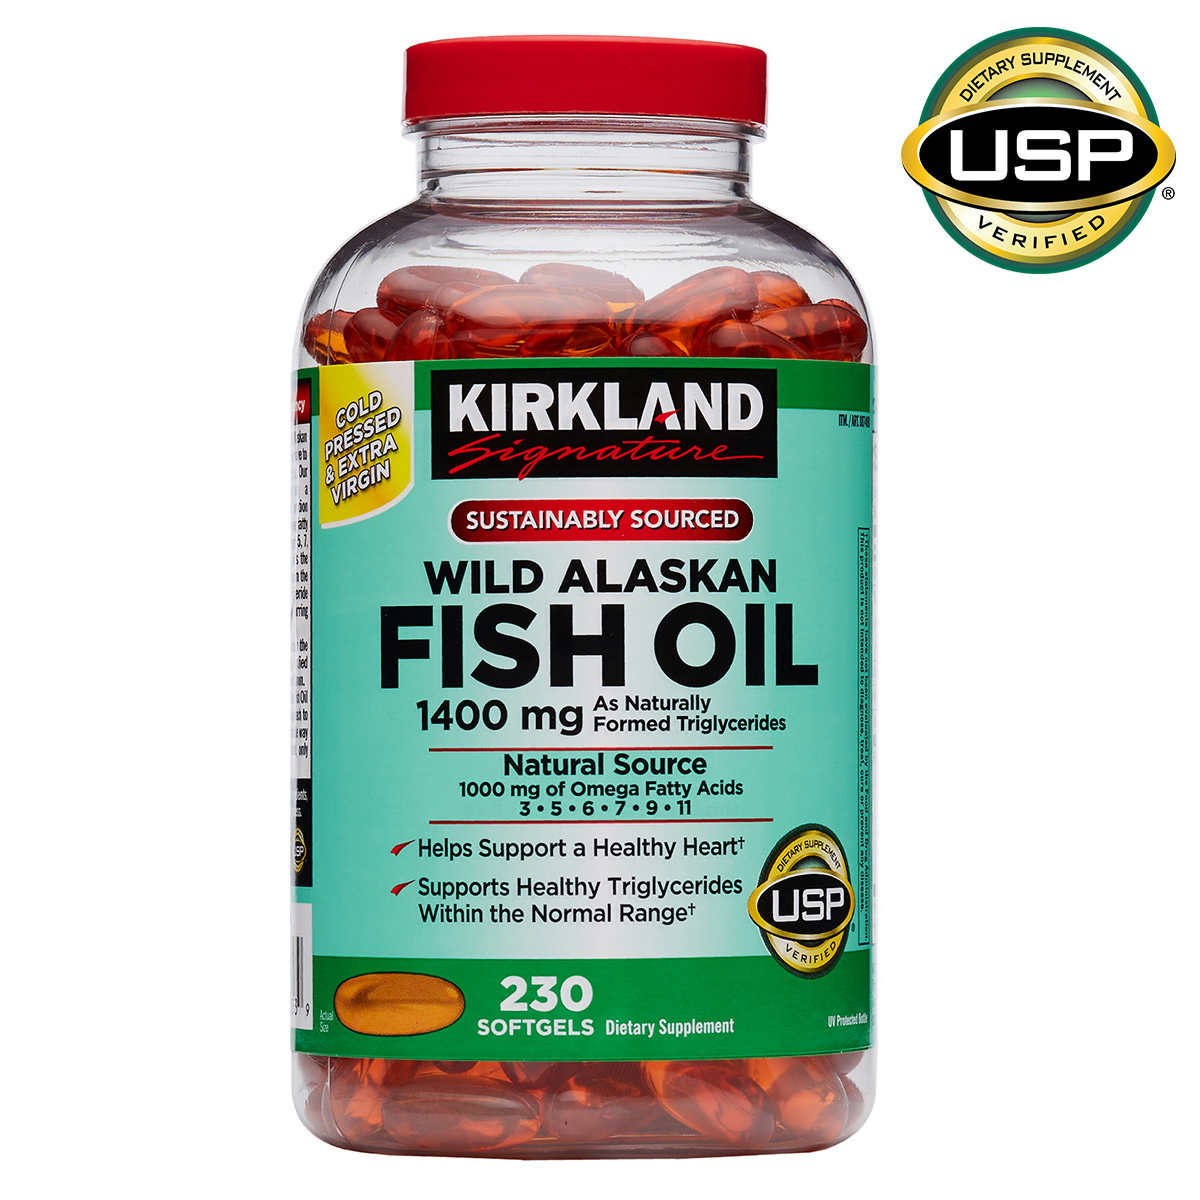 Wild alaskan fish oil